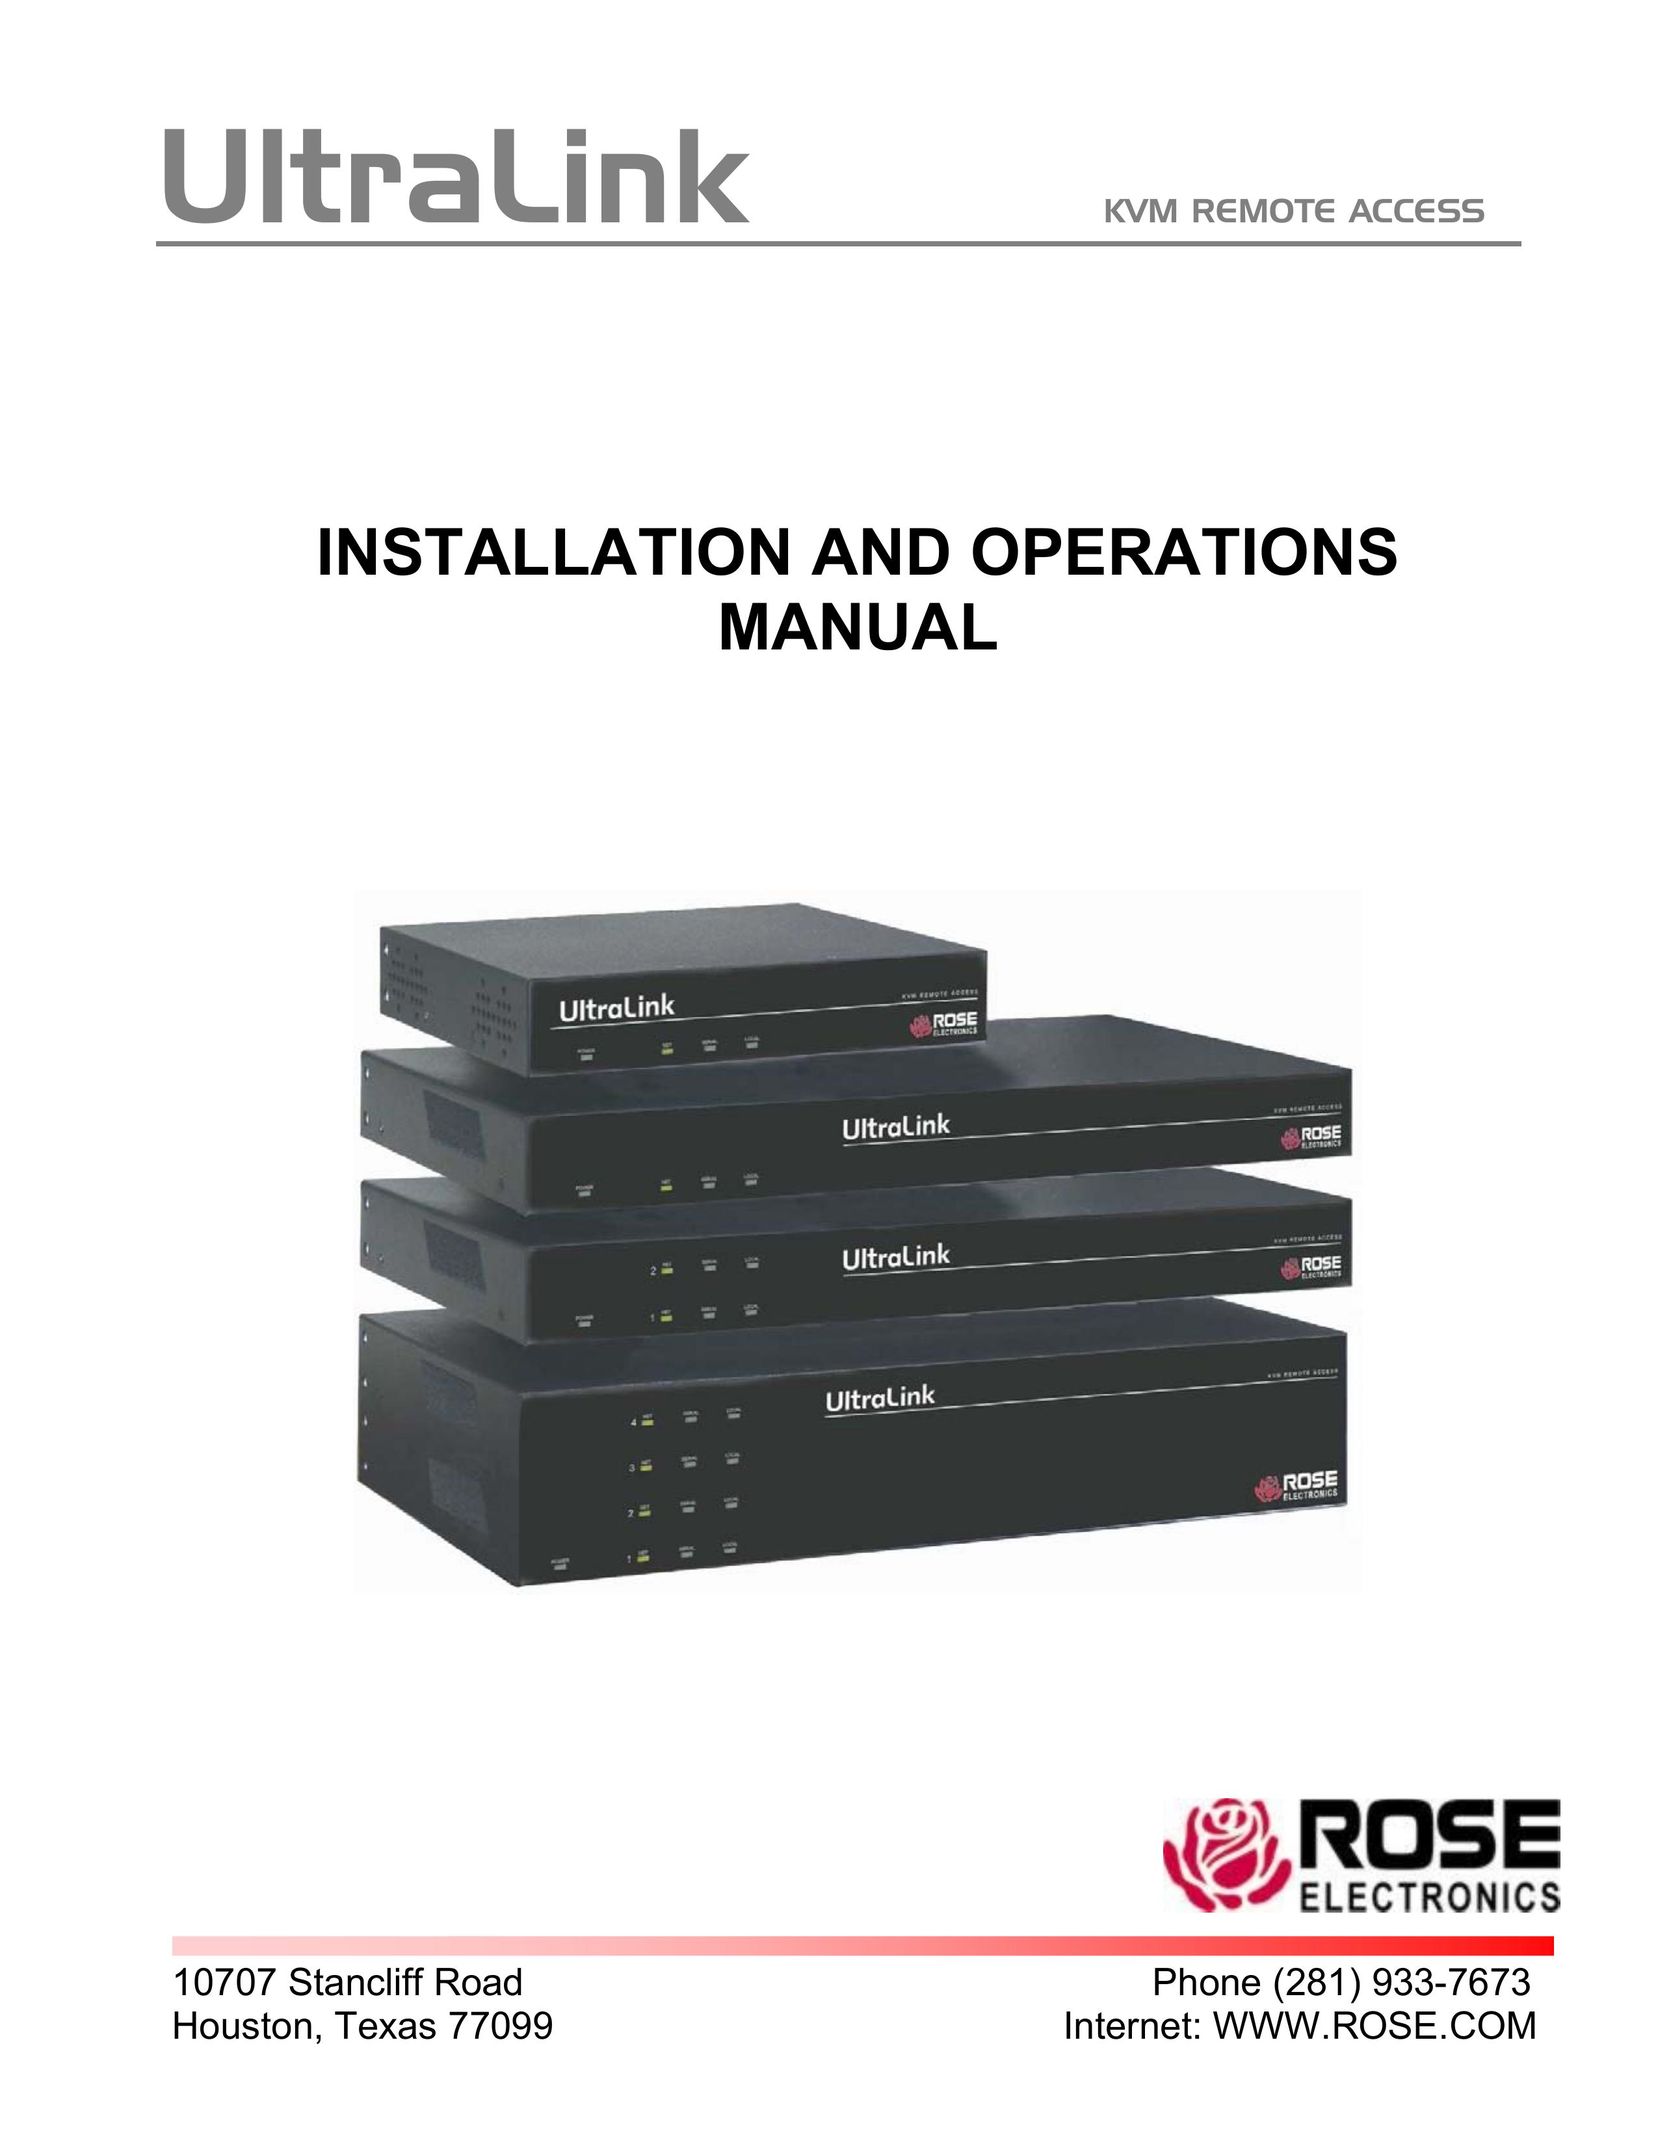 Rose electronic UL-V3 Switch User Manual